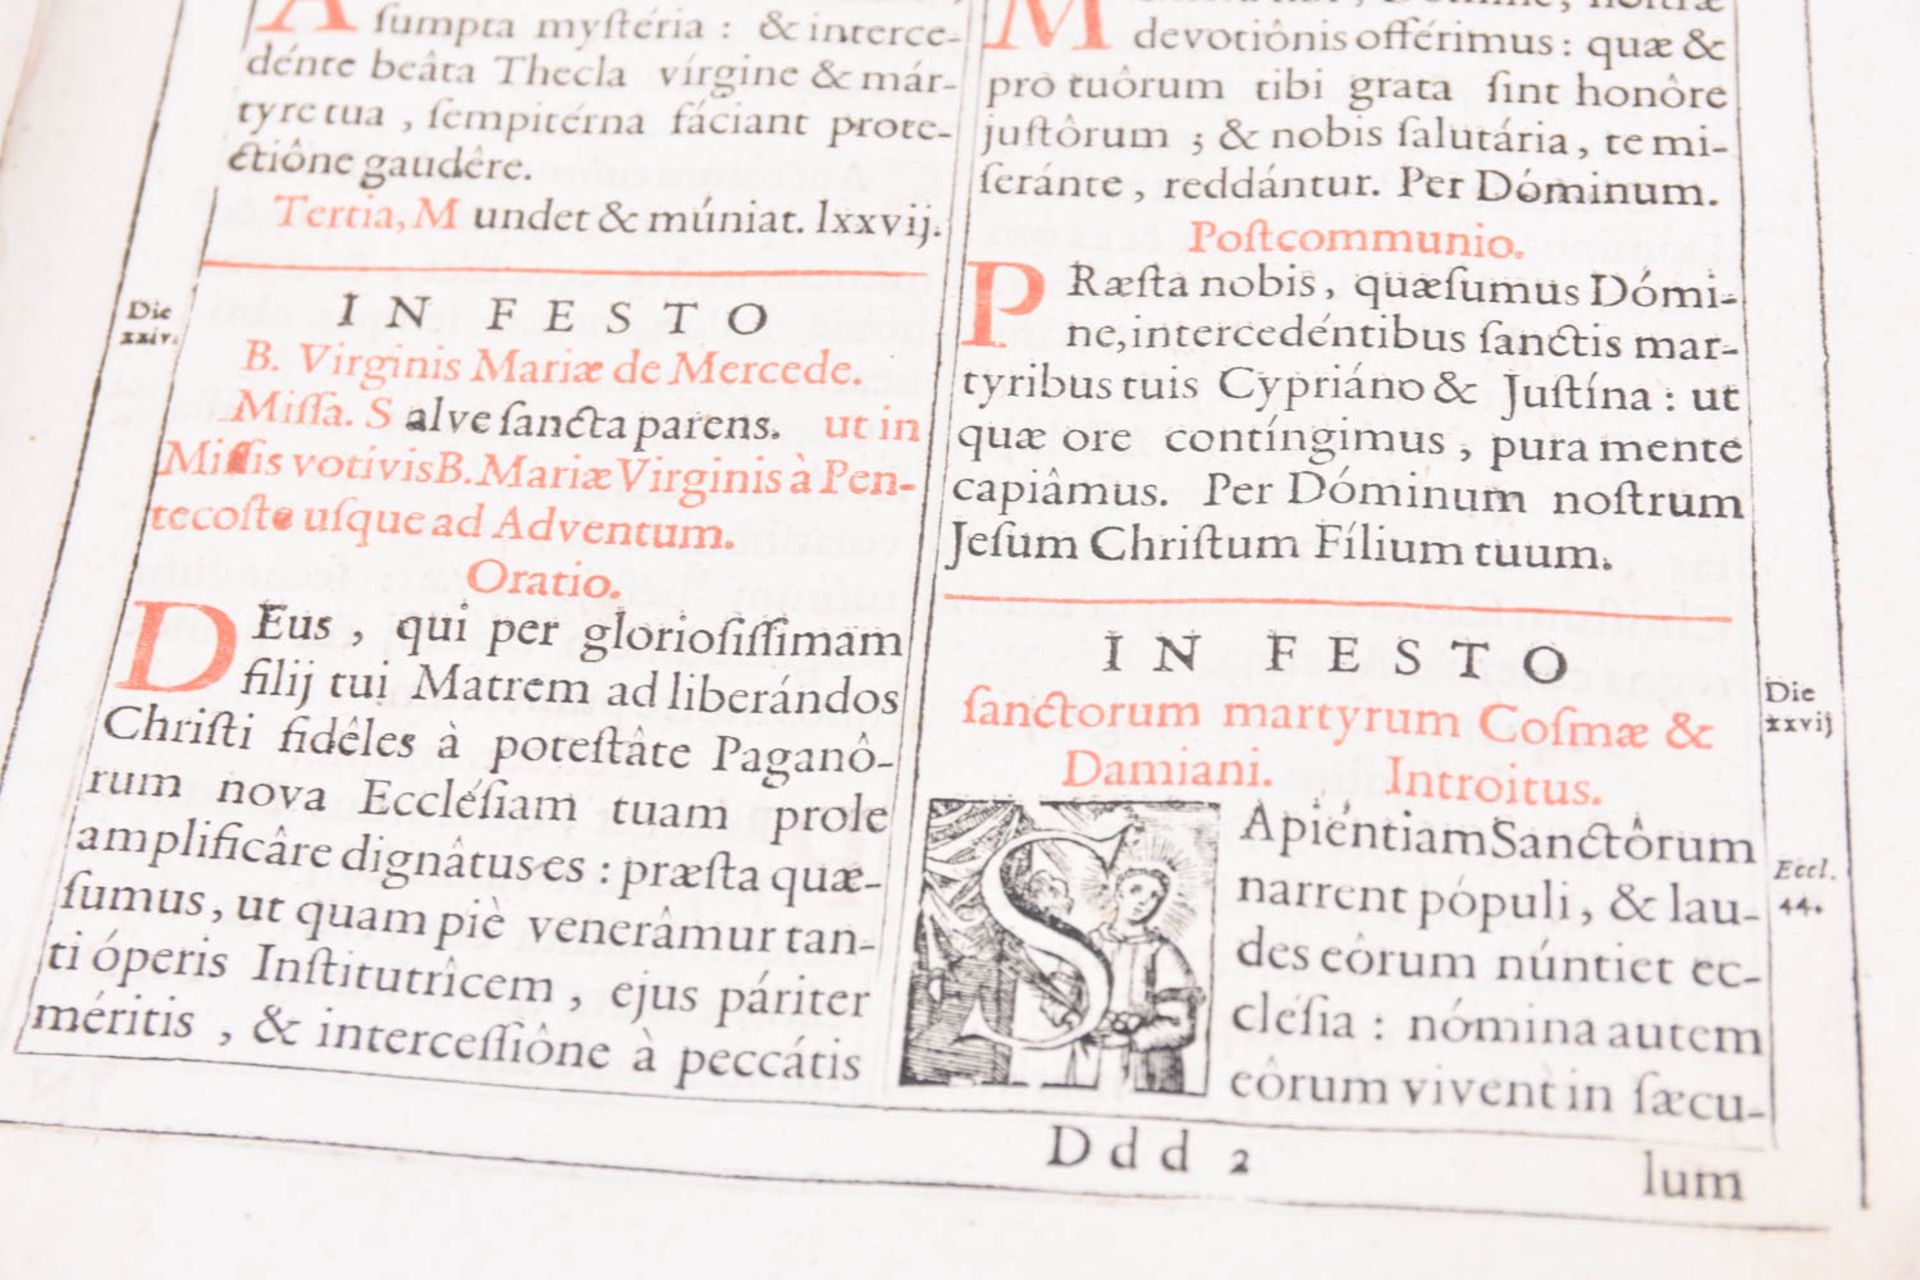 Missale Novum Romanum - Image 14 of 16